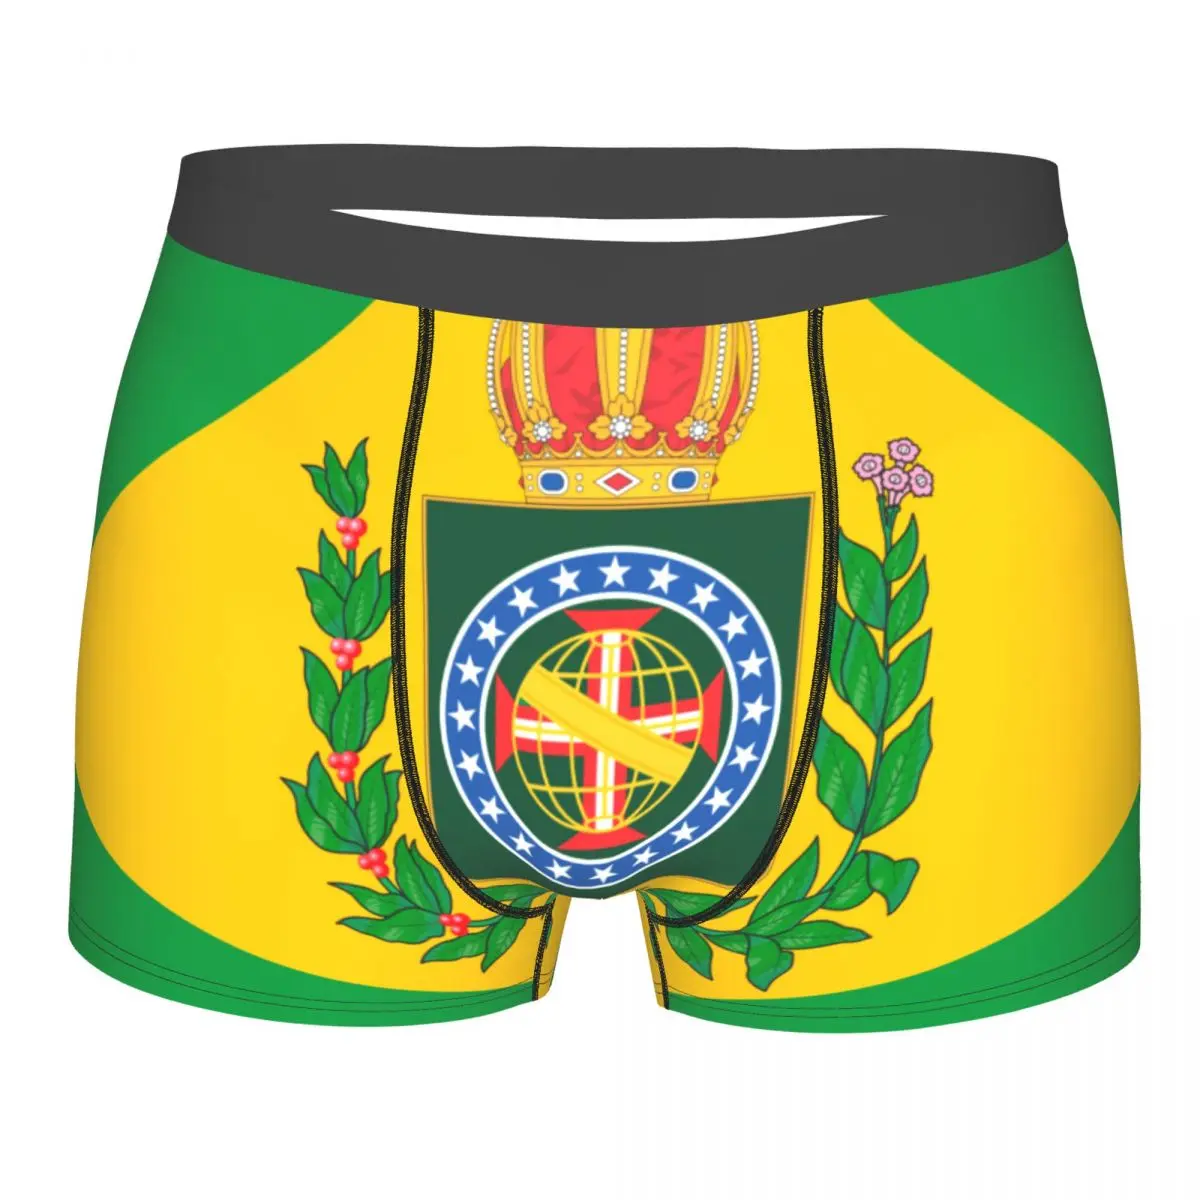 Men's Panties Underpants Boxers Underwear Empire Of Brazil Sexy Male Shorts